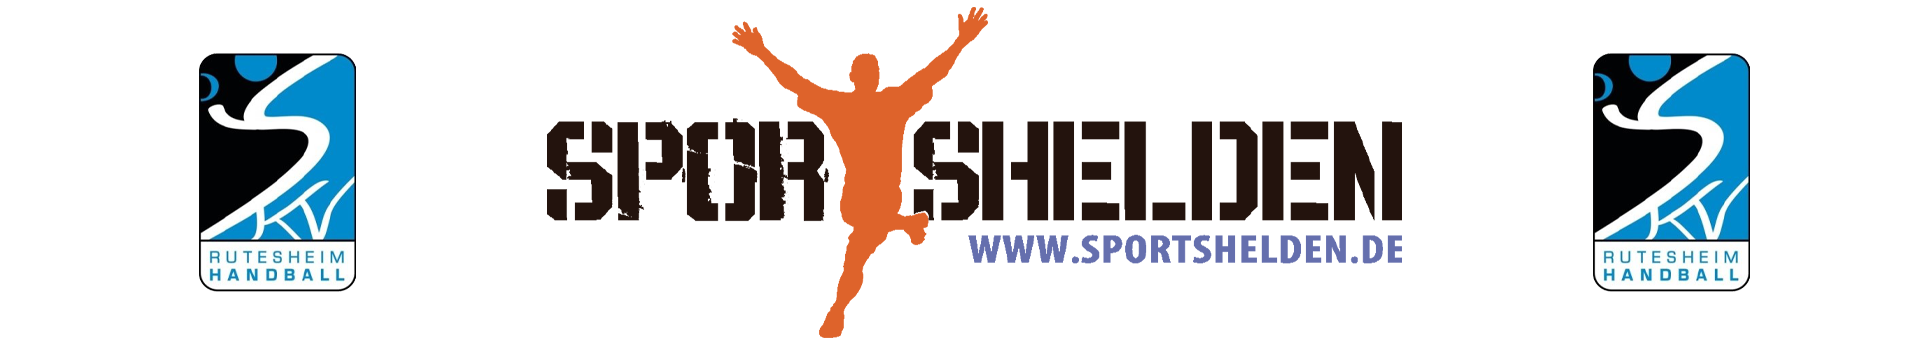 SKV Rutesheim Handball 2023 Title Image